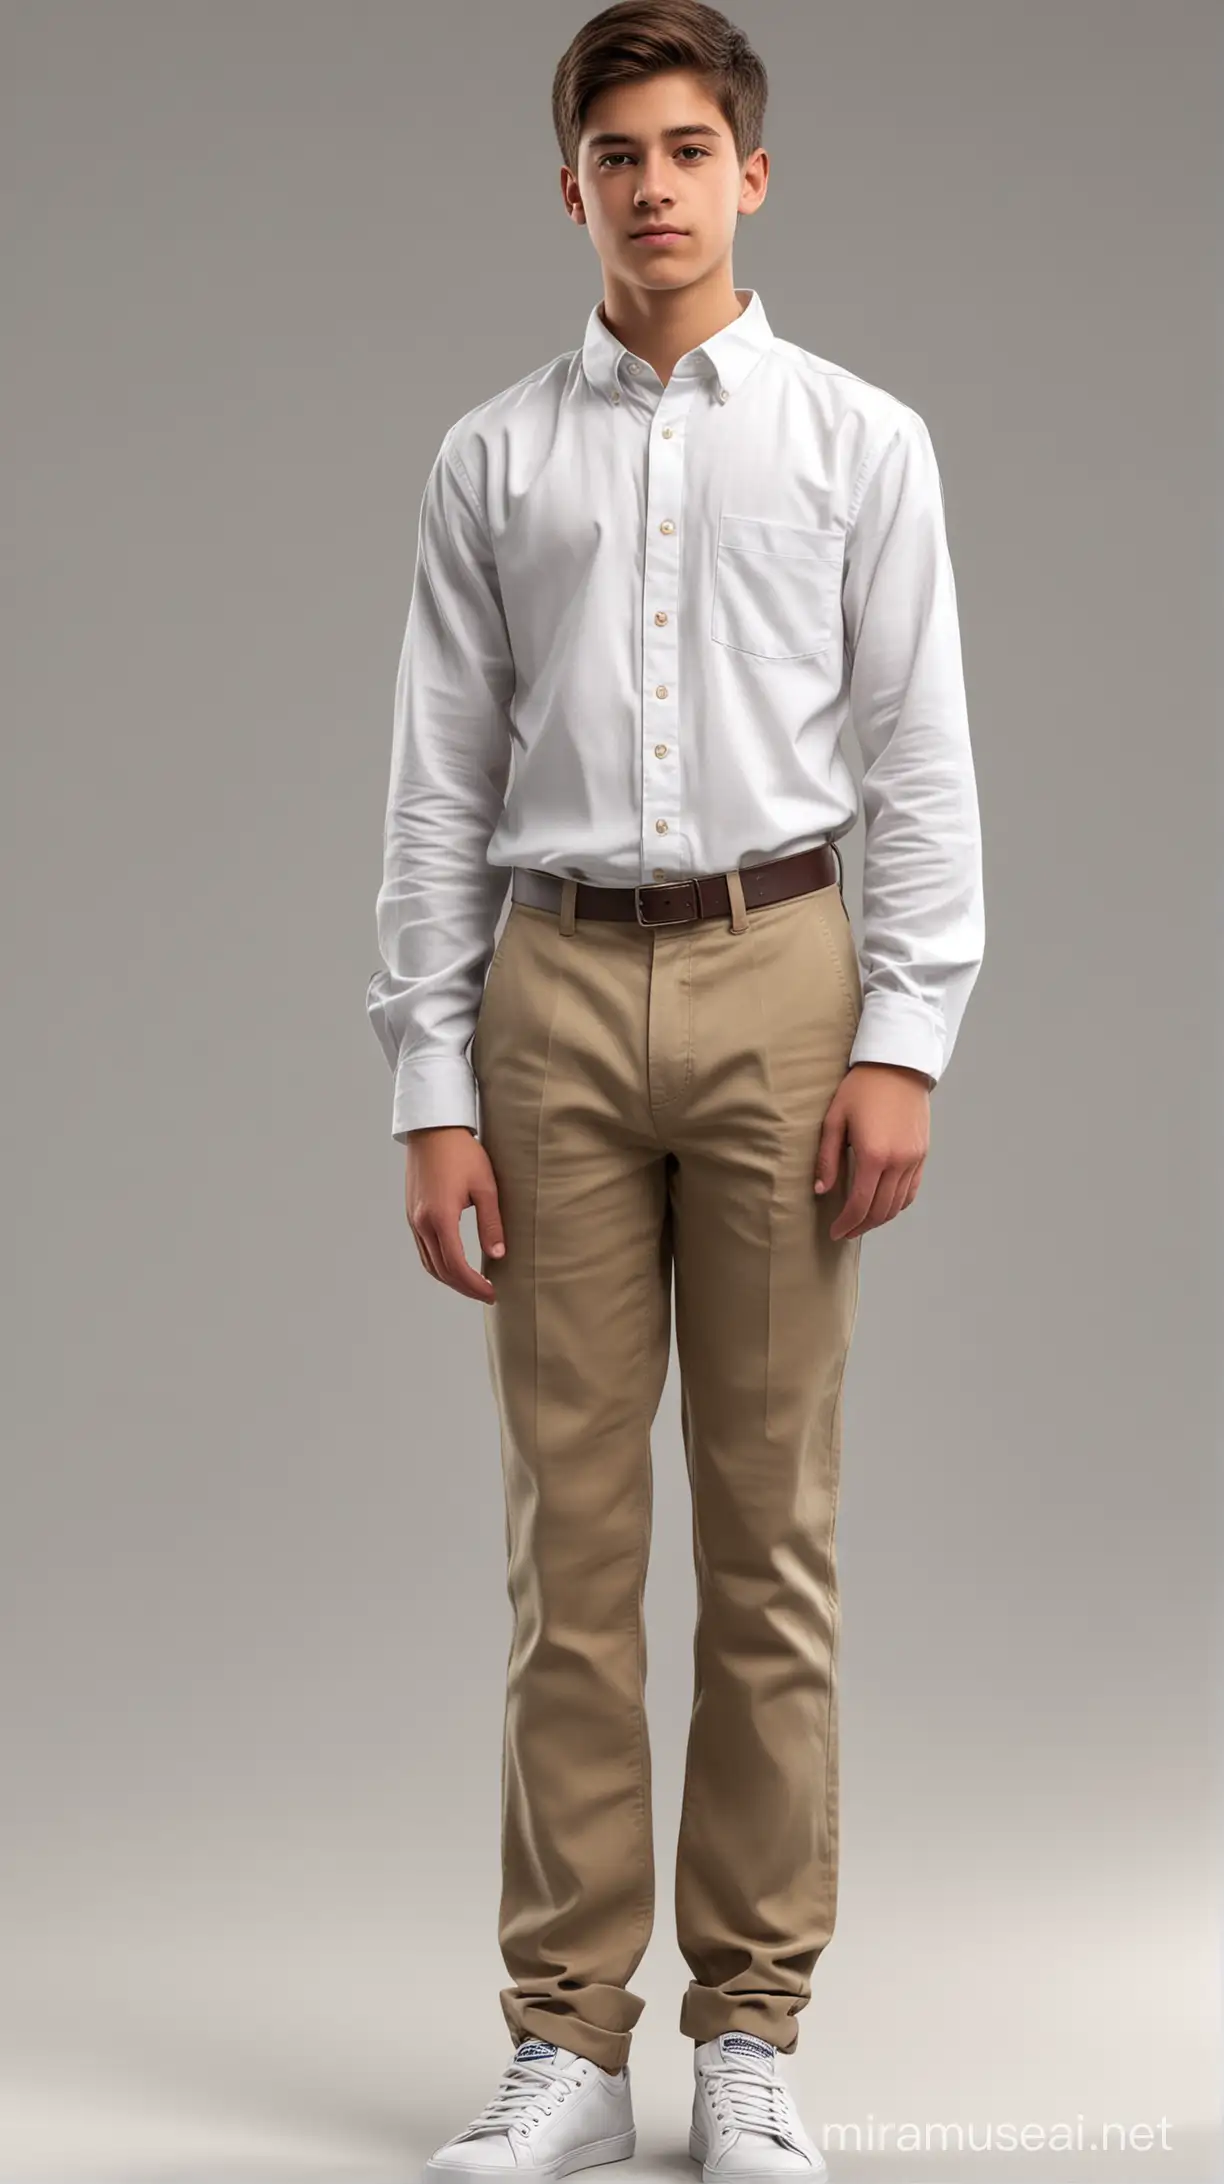 Handsome Teenage School Boy in White Shirt and Khaki Pants